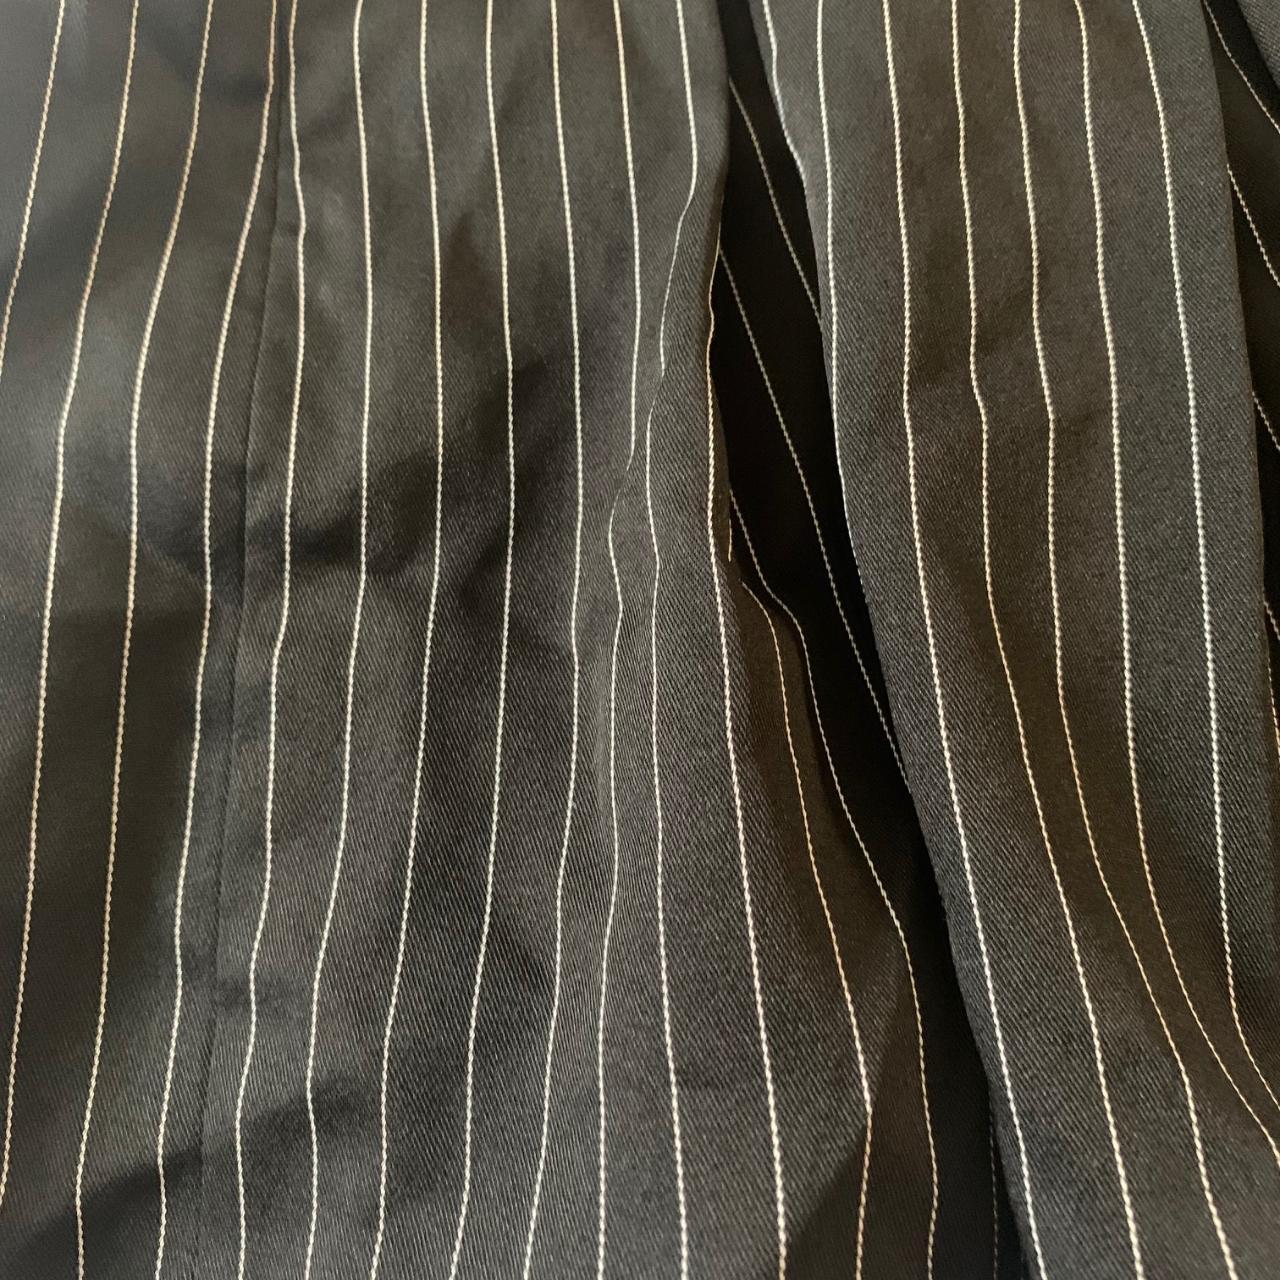 Black striped pleated mini skirt from Shein. Size... - Depop